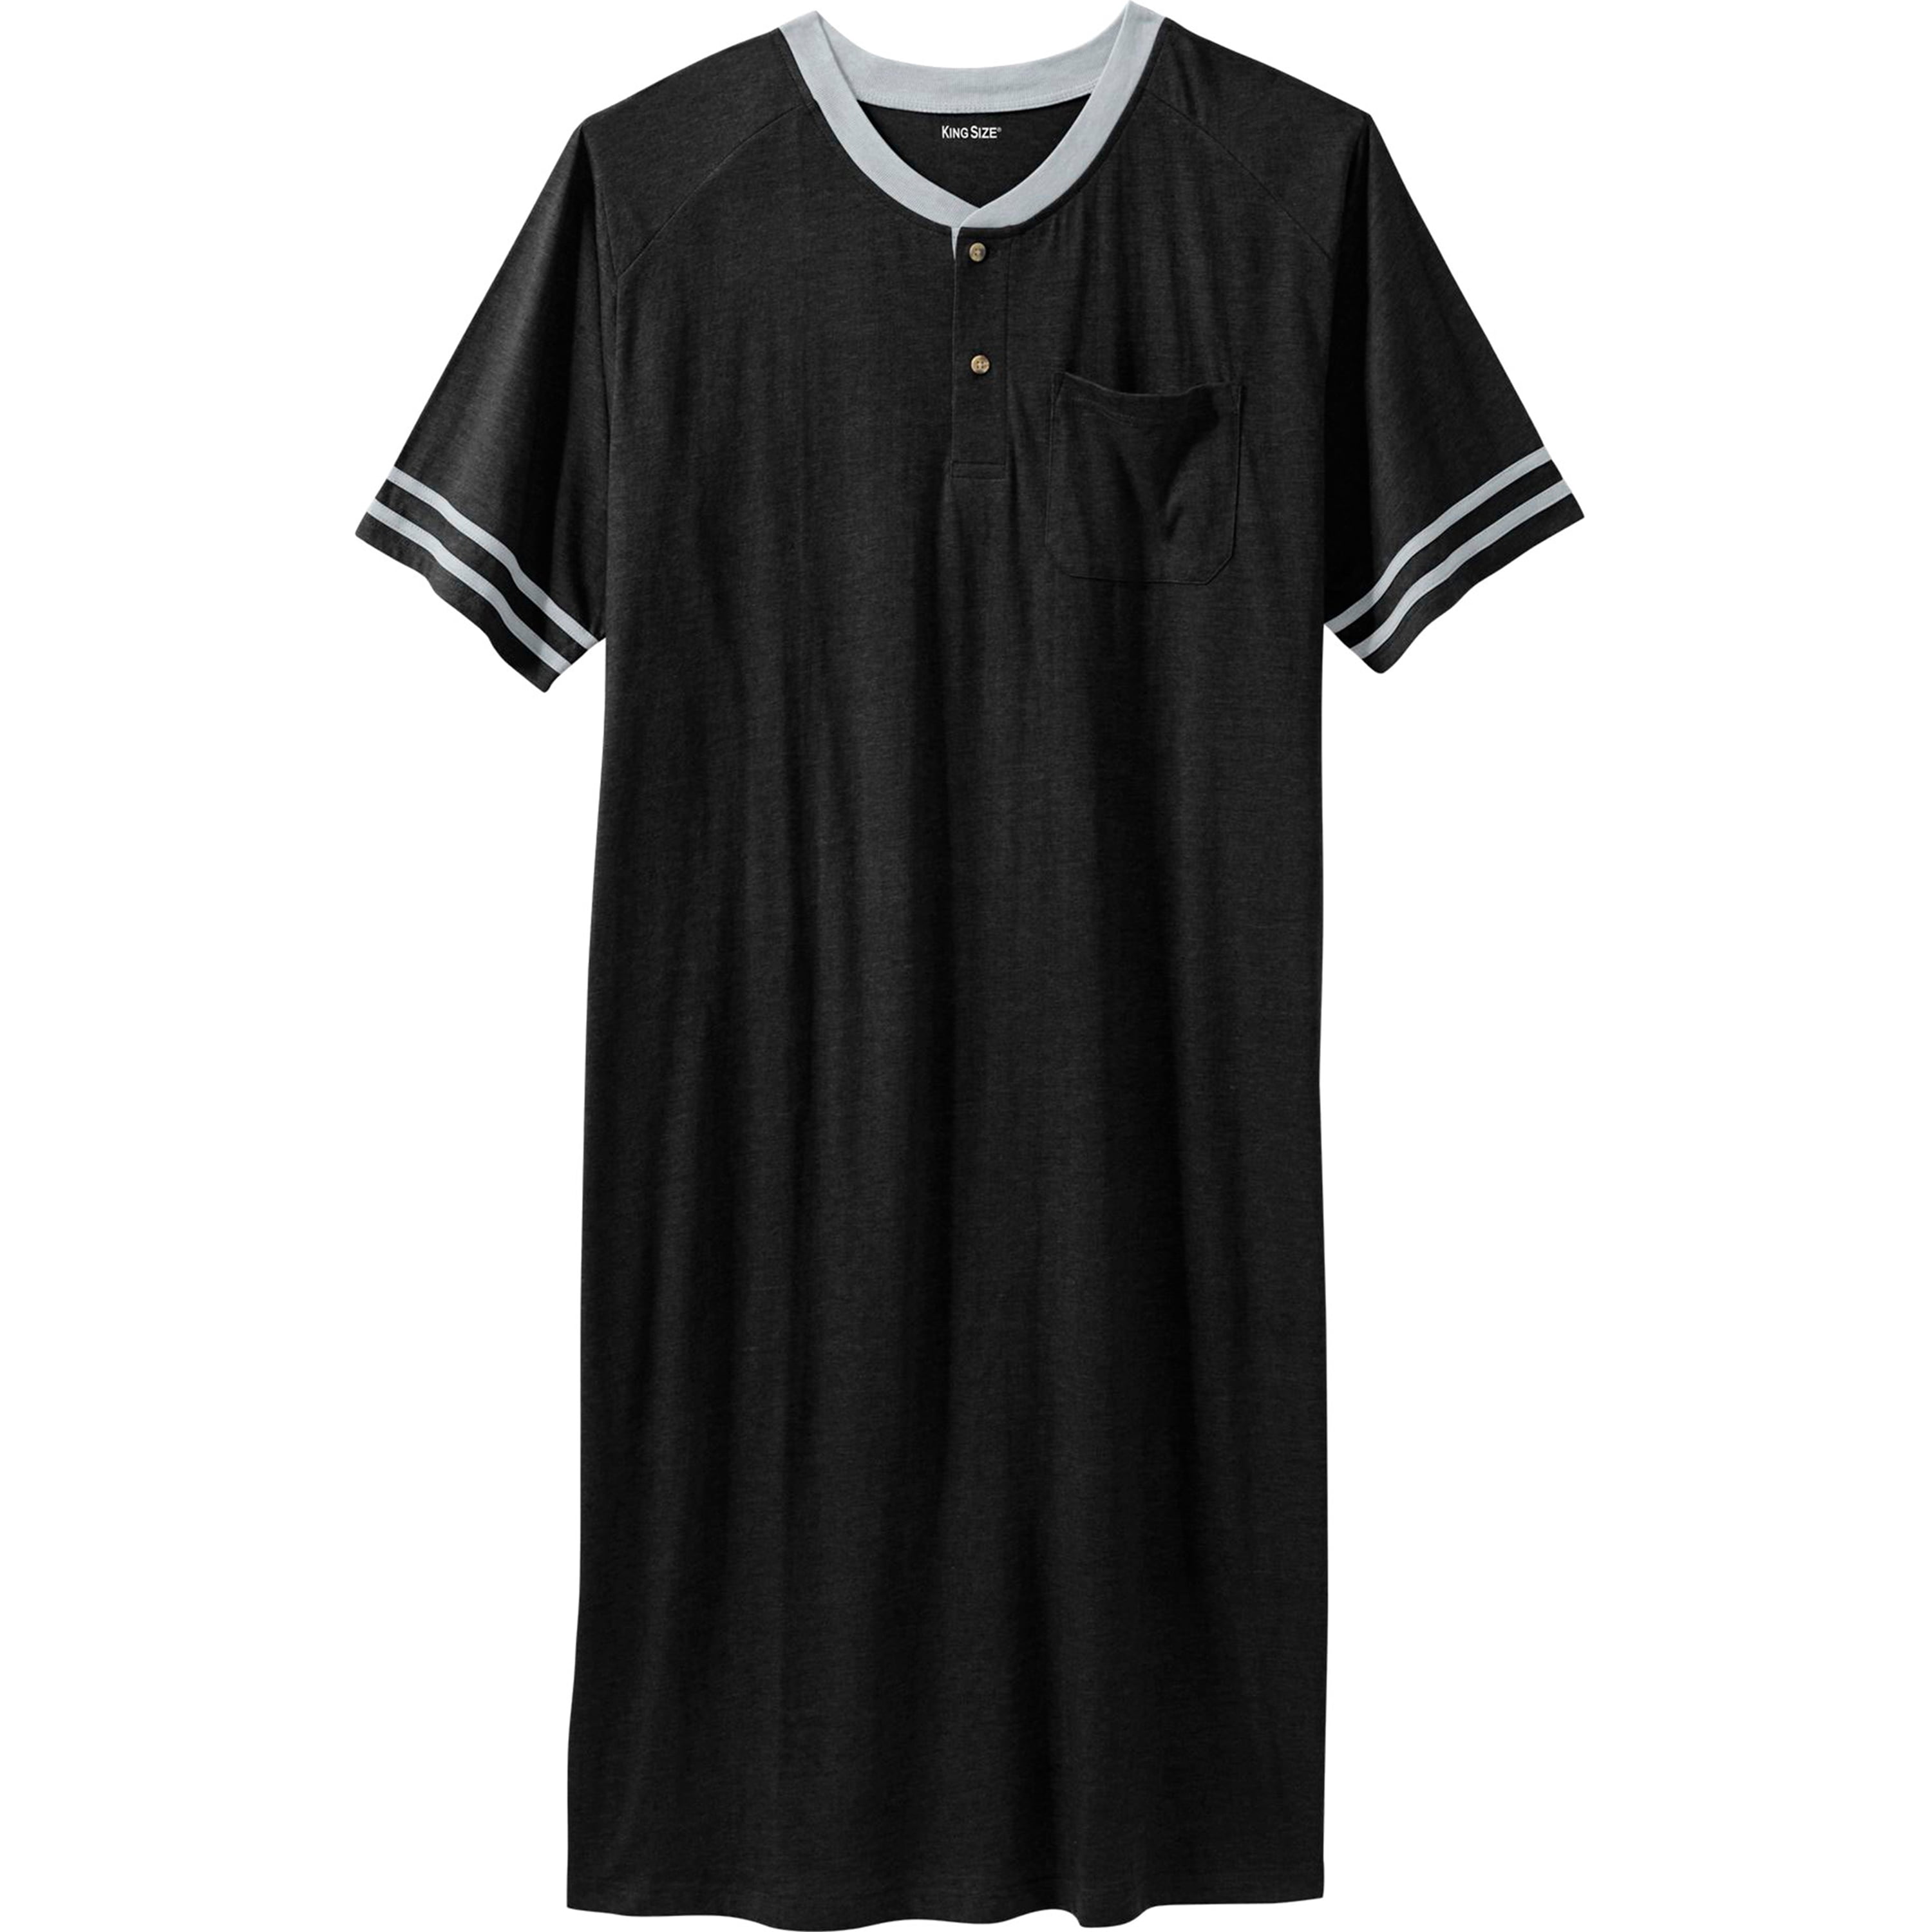 7 VEILS Men’s Night Shirt Nightwear Comfy Big & Tall Short Sleeve Henley  Sleep Shirt Tops Nightgown : : Clothing, Shoes & Accessories